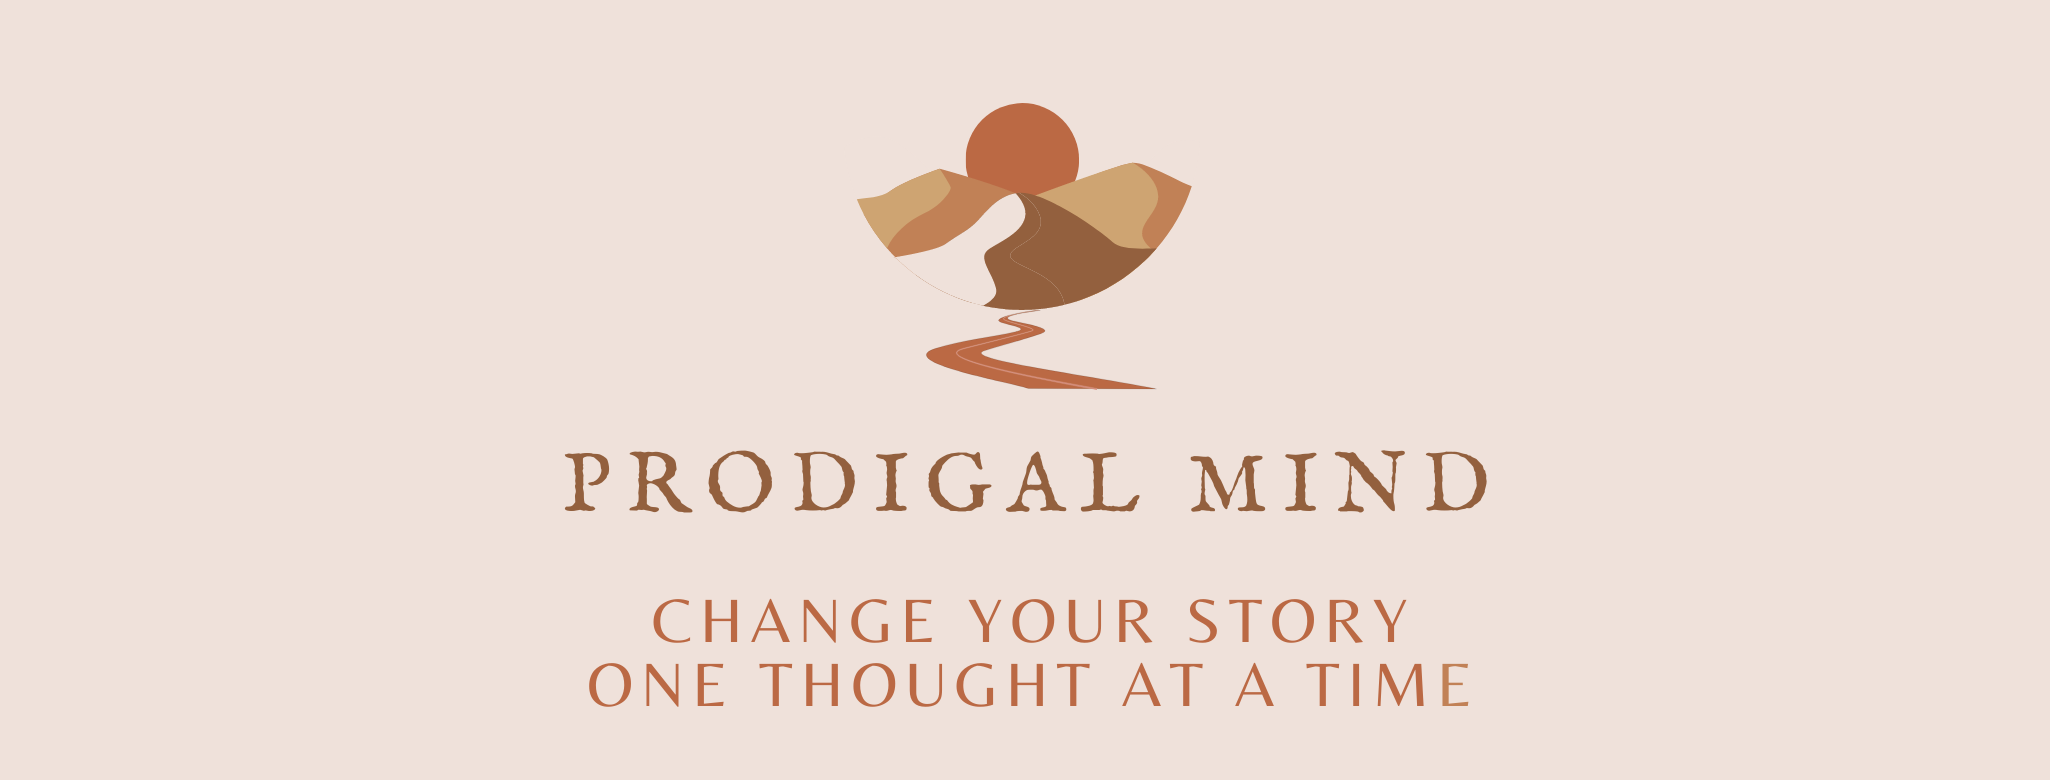 144-prodigal-mind-facebook-page.png